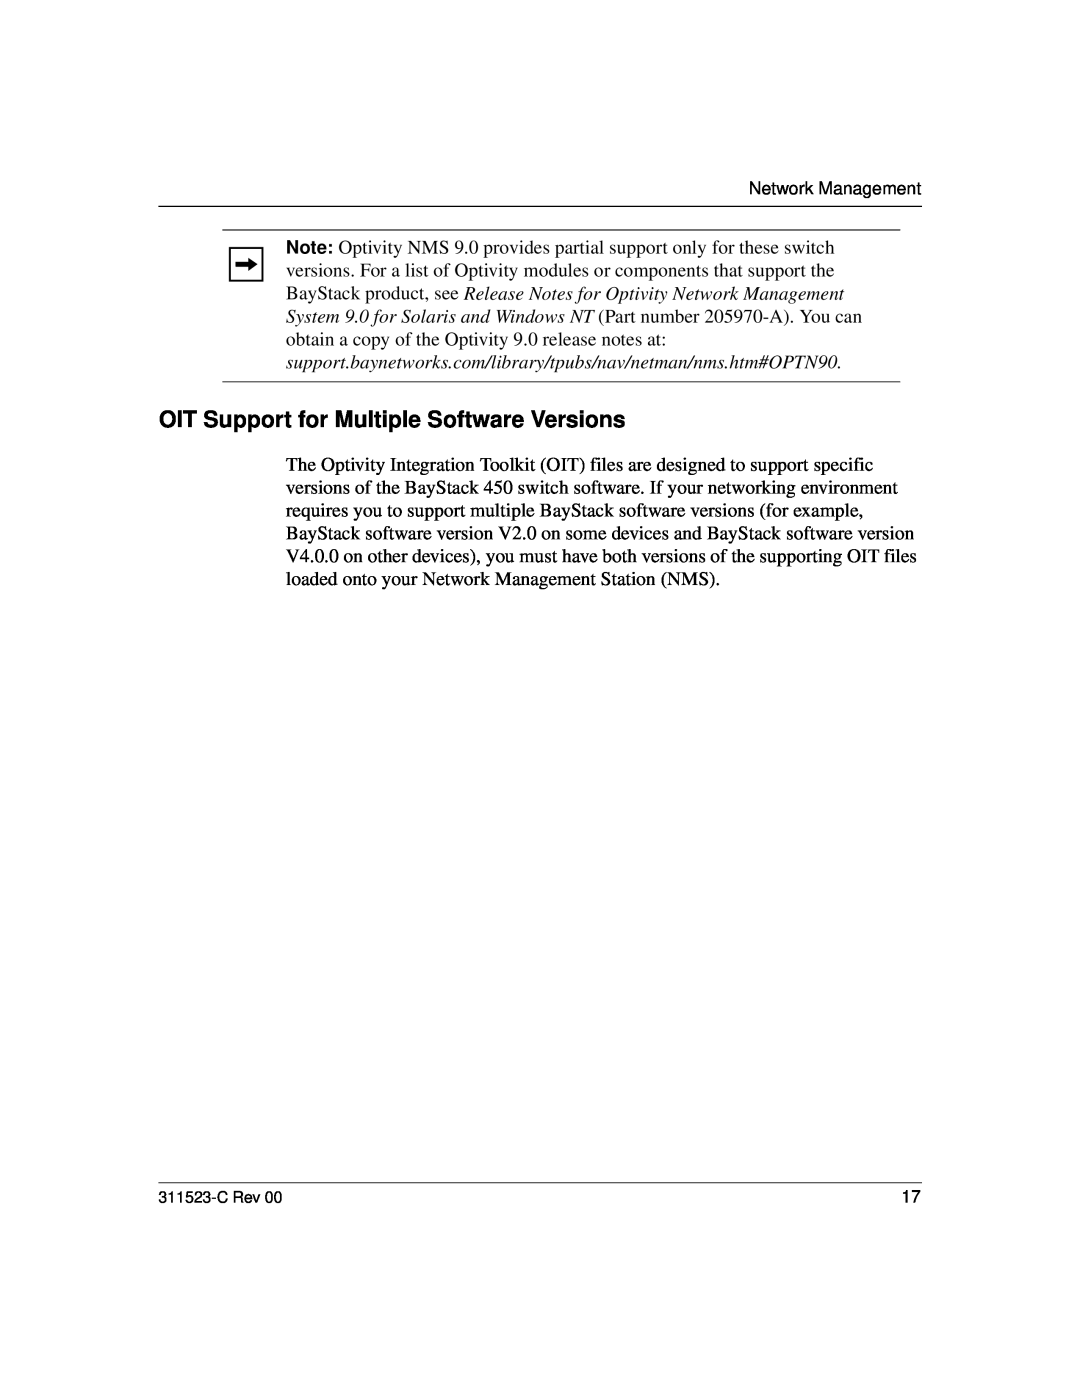 Nortel Networks 100 manual OIT Support for Multiple Software Versions, Network Management 